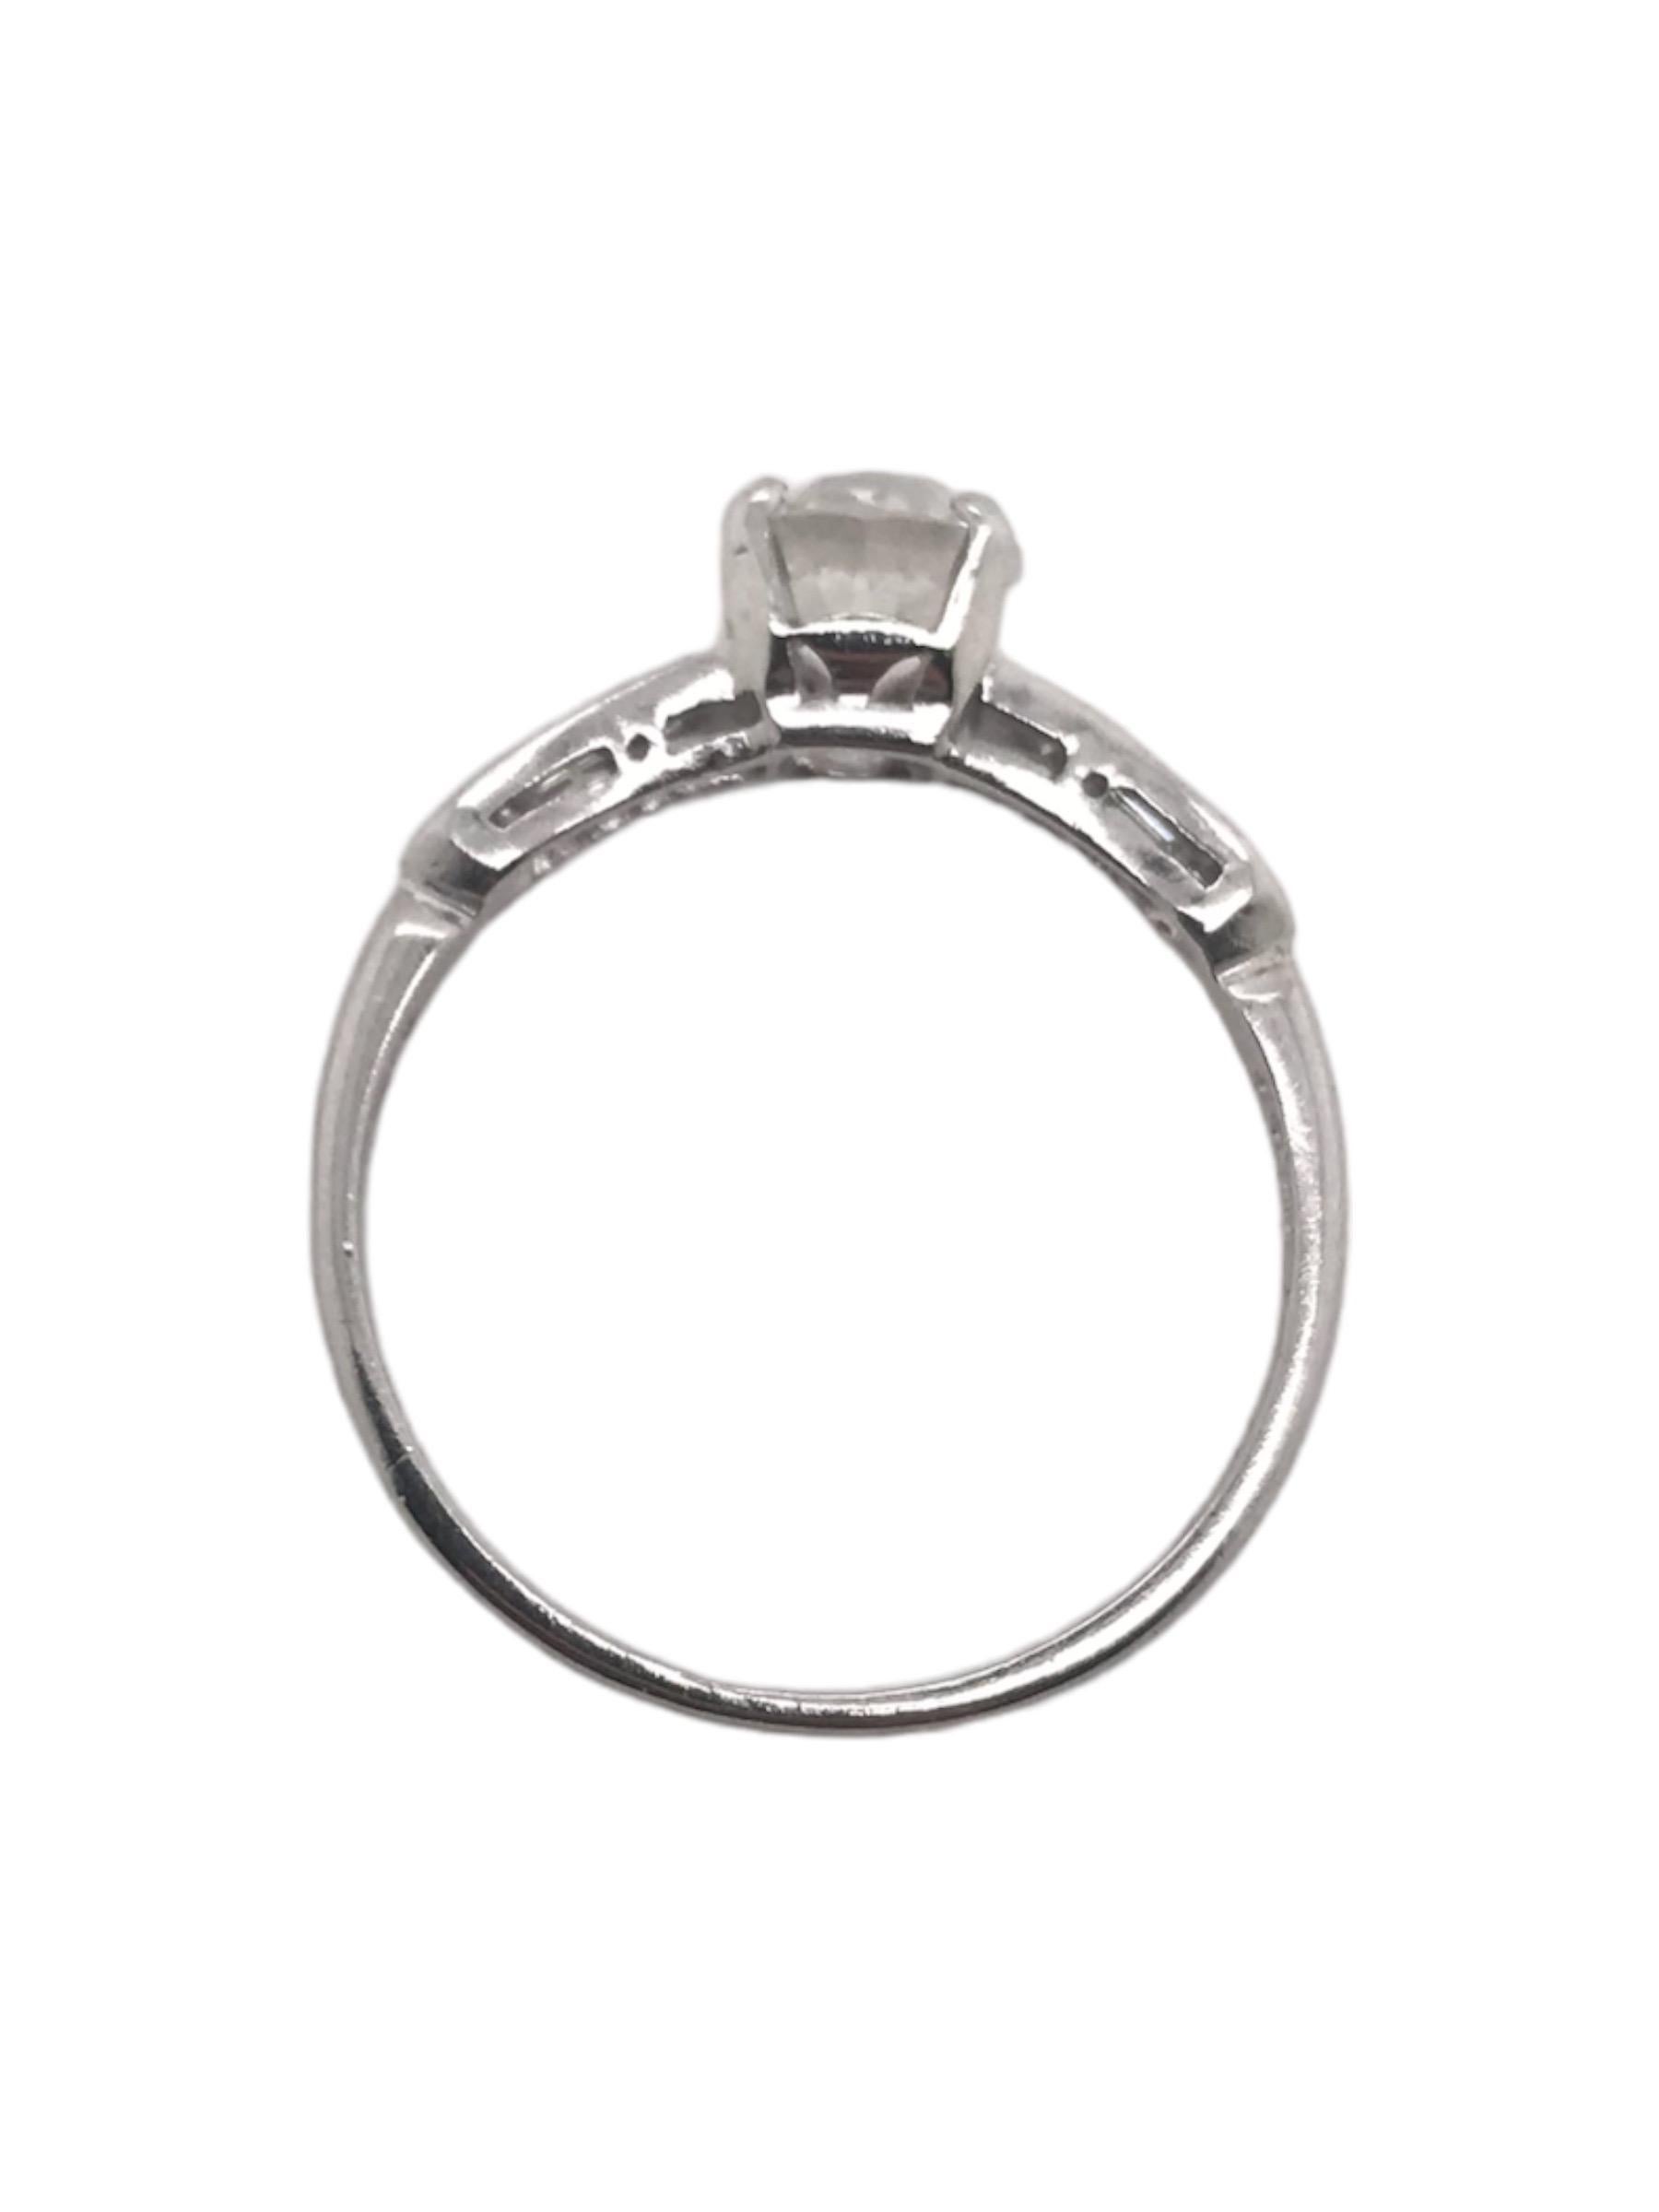 Platinum 0.94 Carat Old European Cut Diamond Engagement Ring For Sale 1